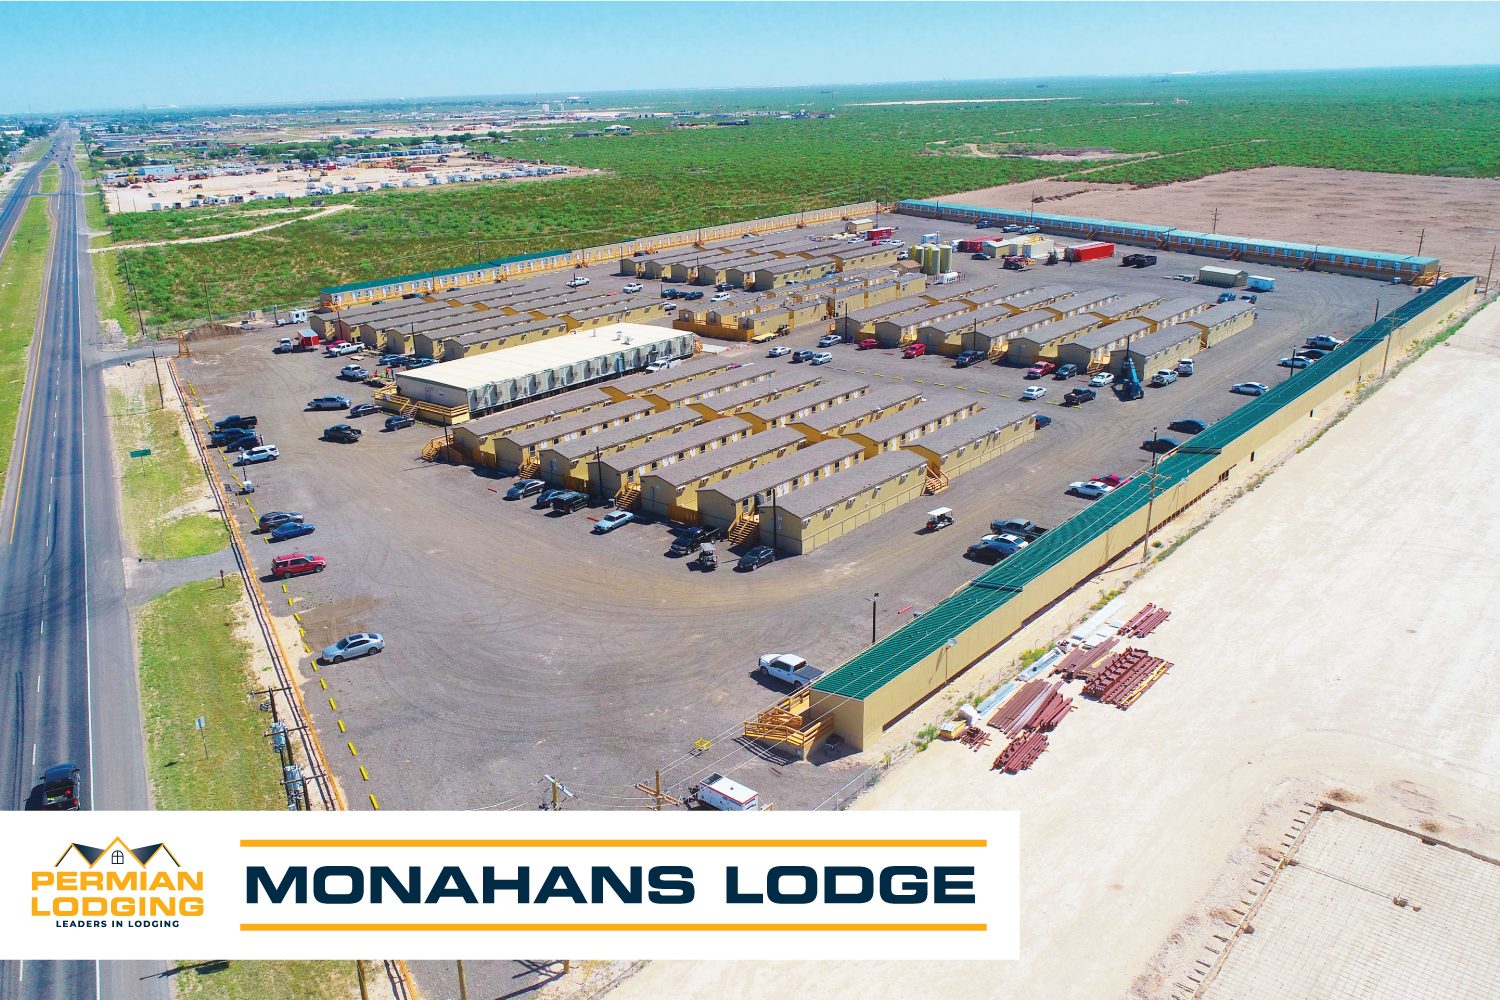 Monahans Lodge